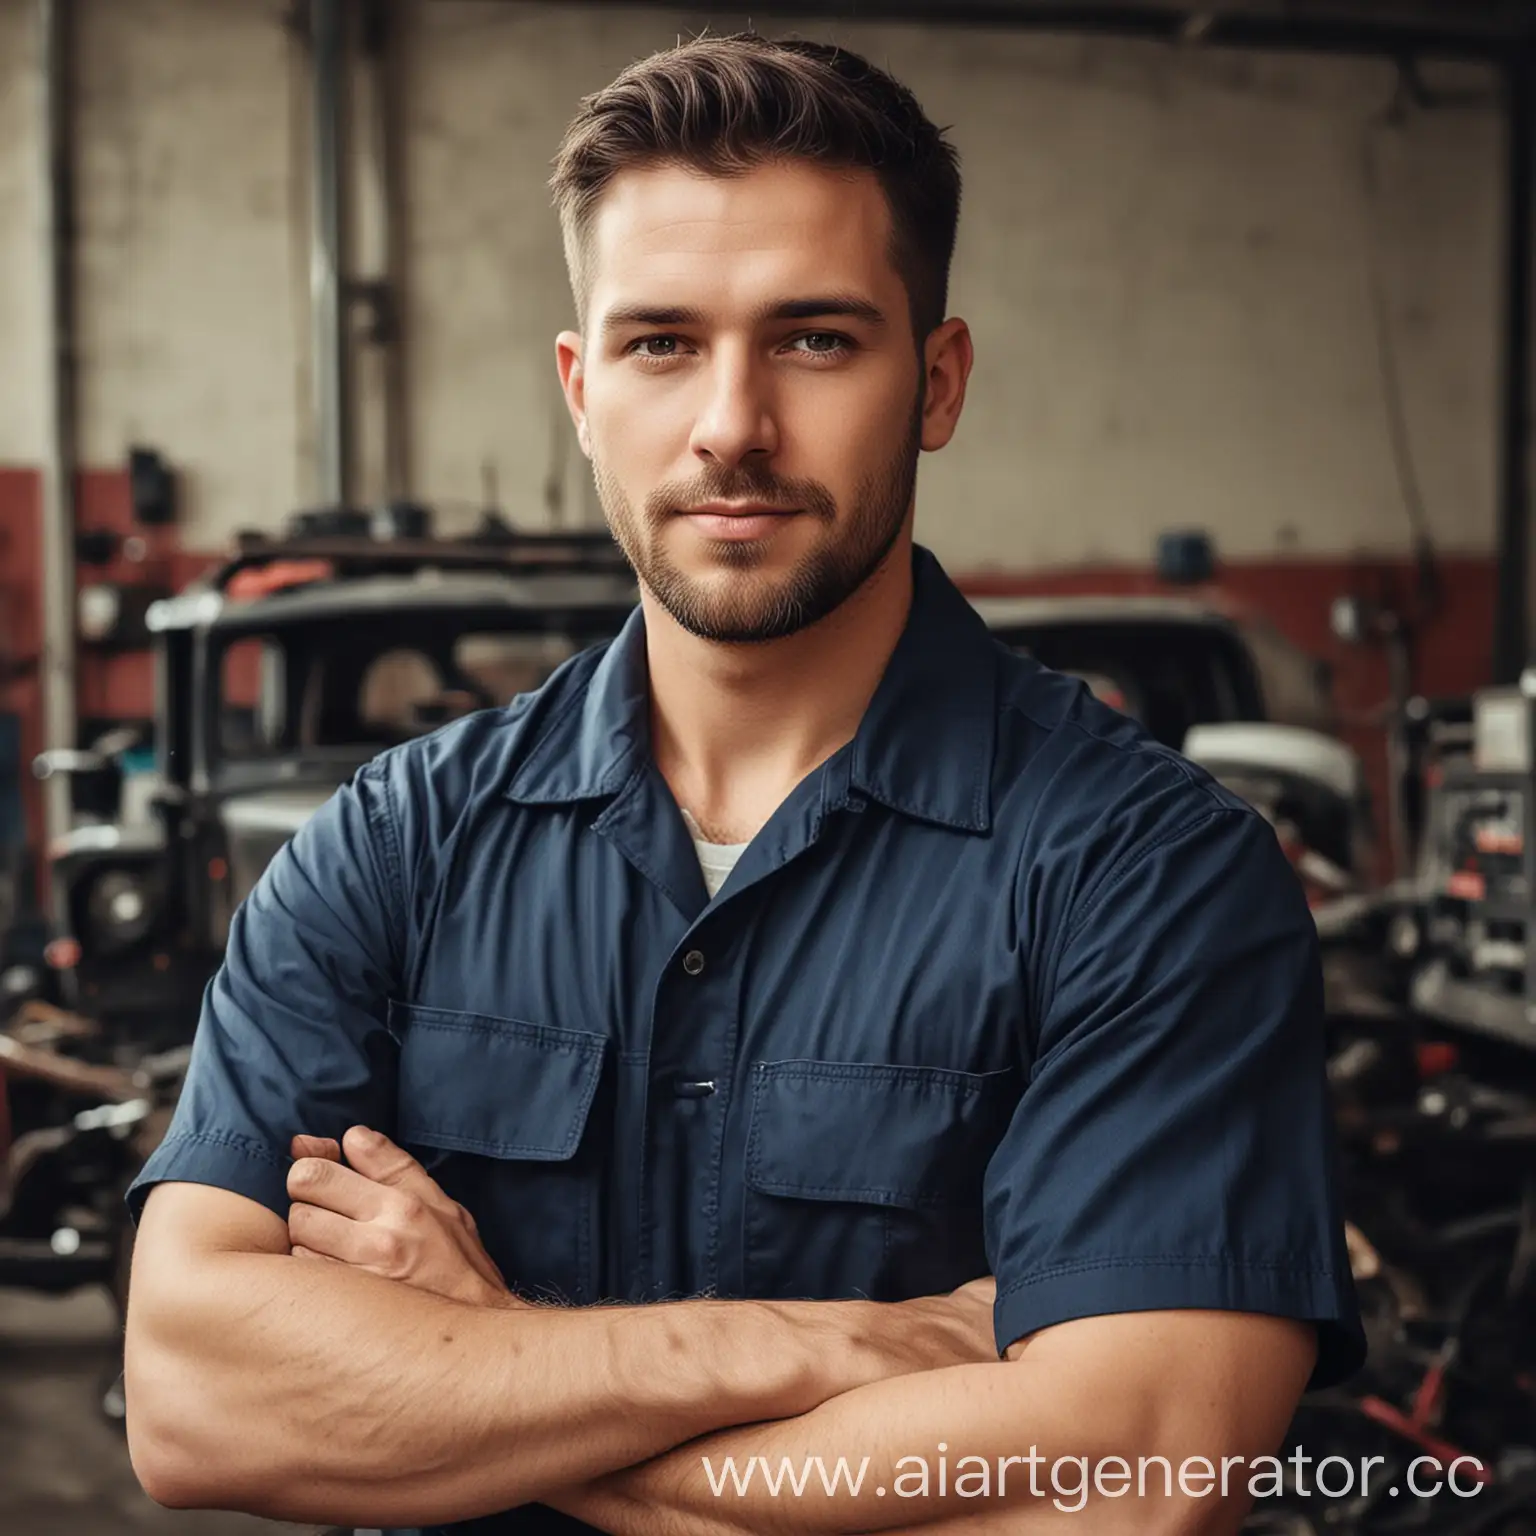 Professional-Mechanic-in-Work-Uniform-Fixing-Car-Engine